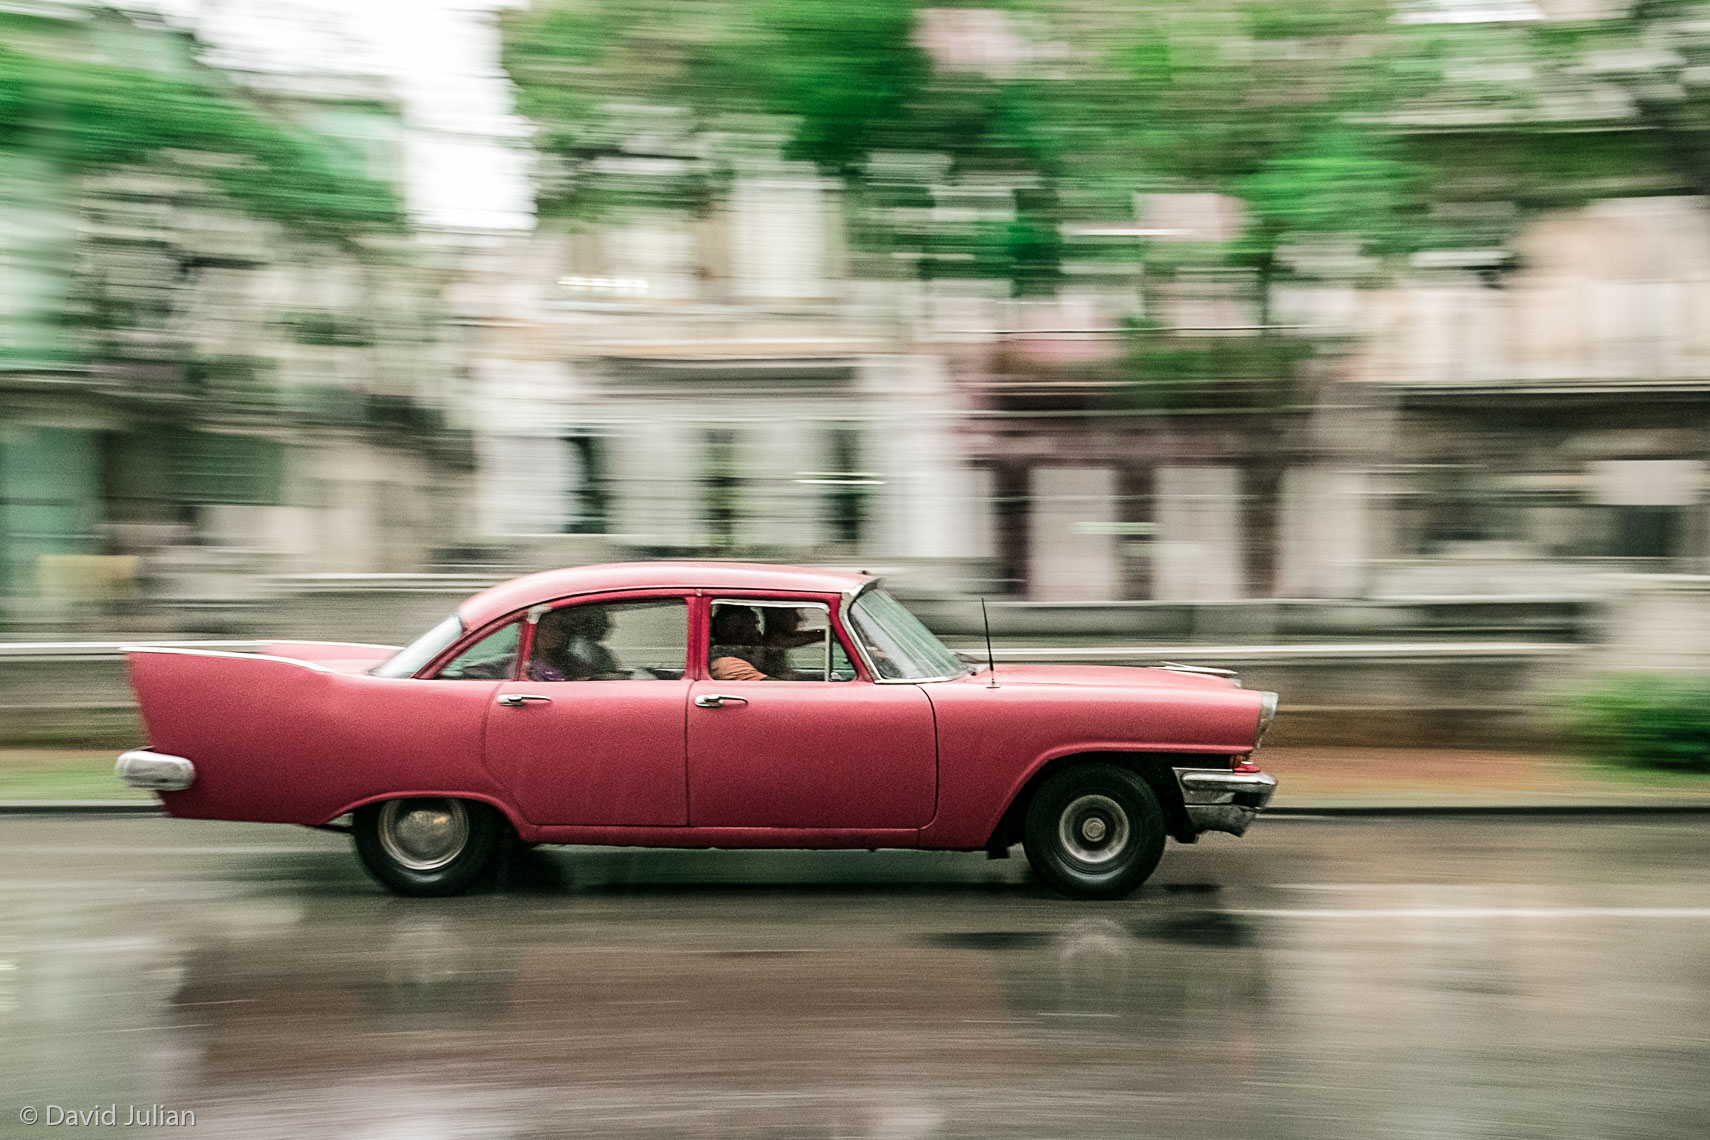 15_Cuba 2014 passing car, Havana-6772-DJeditAPF1860px